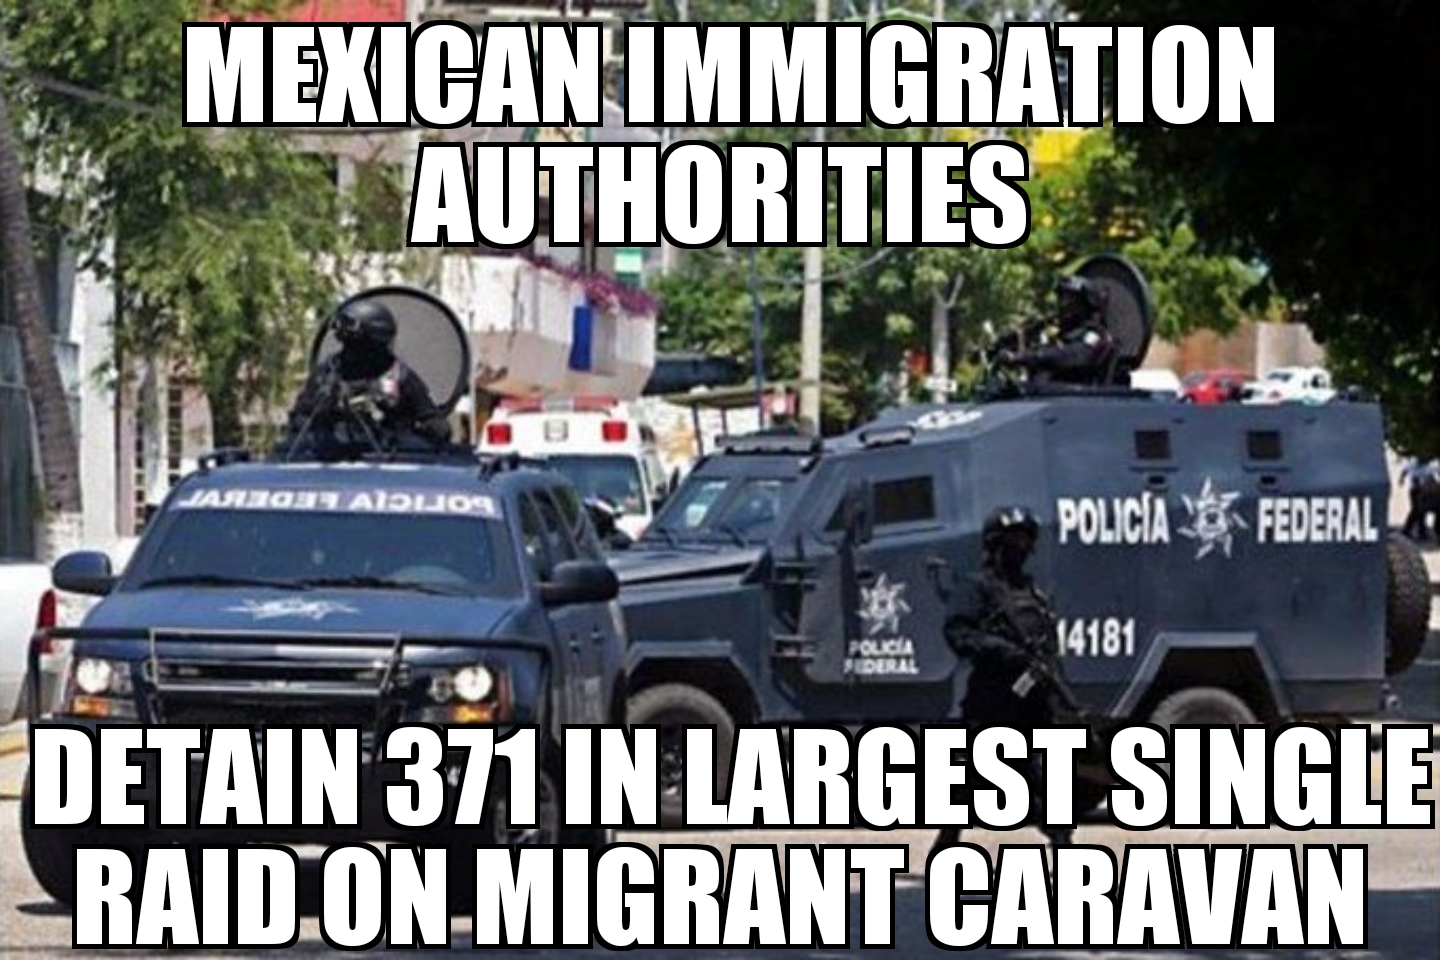 Mexico largest raid on migrant caravan